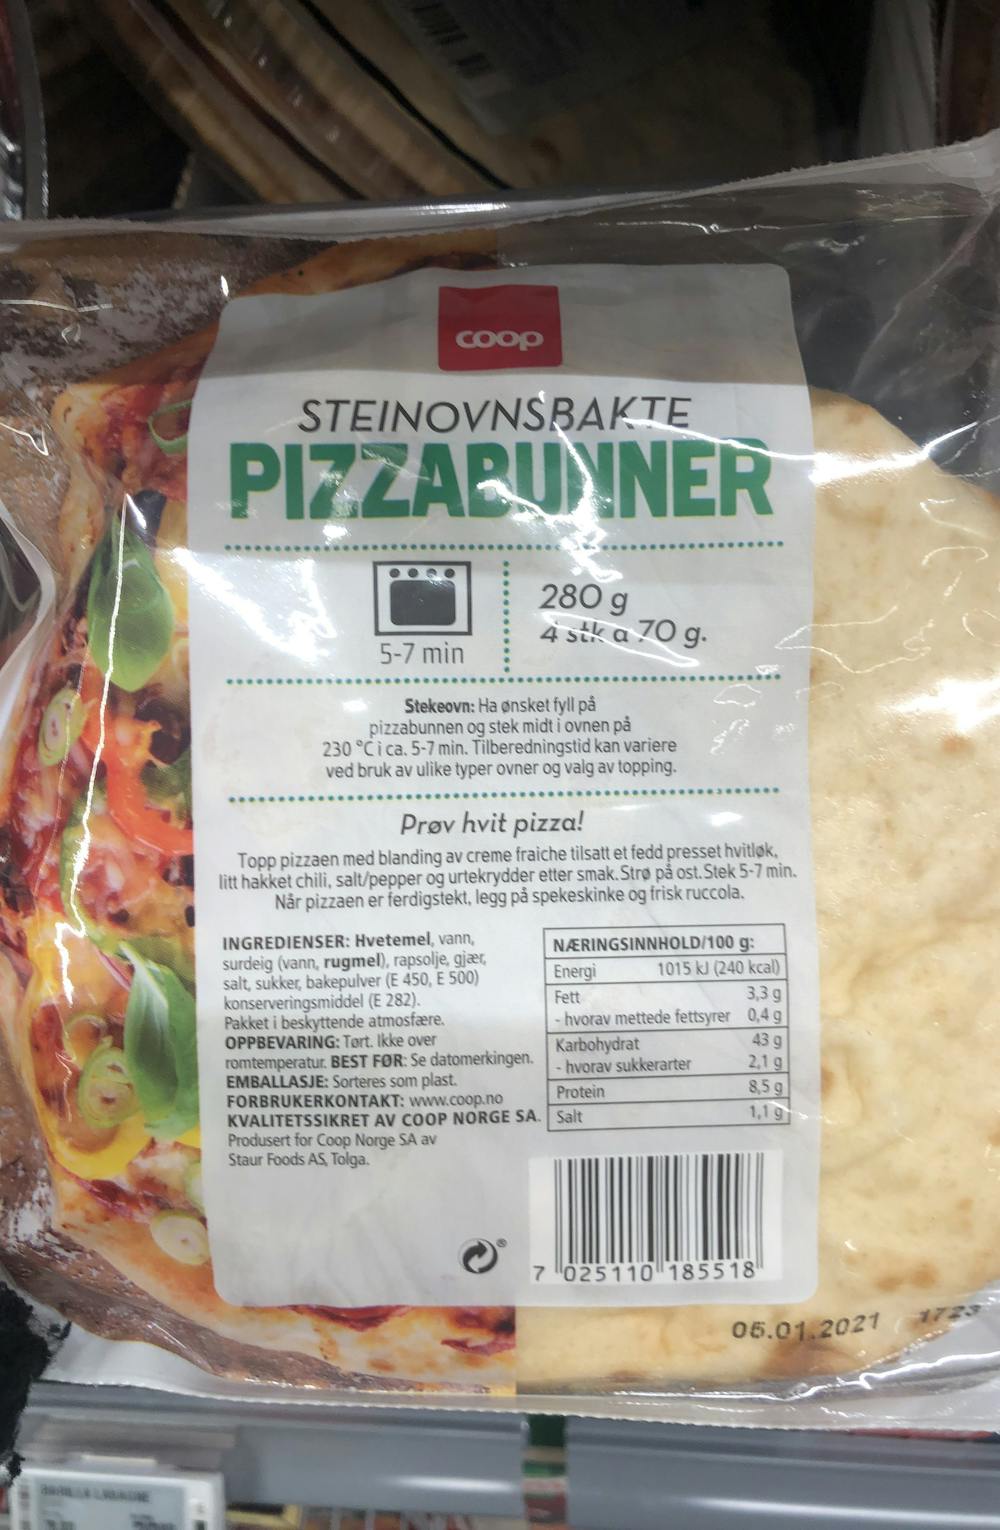 Steinovnsbakte pizzabunner, Coop